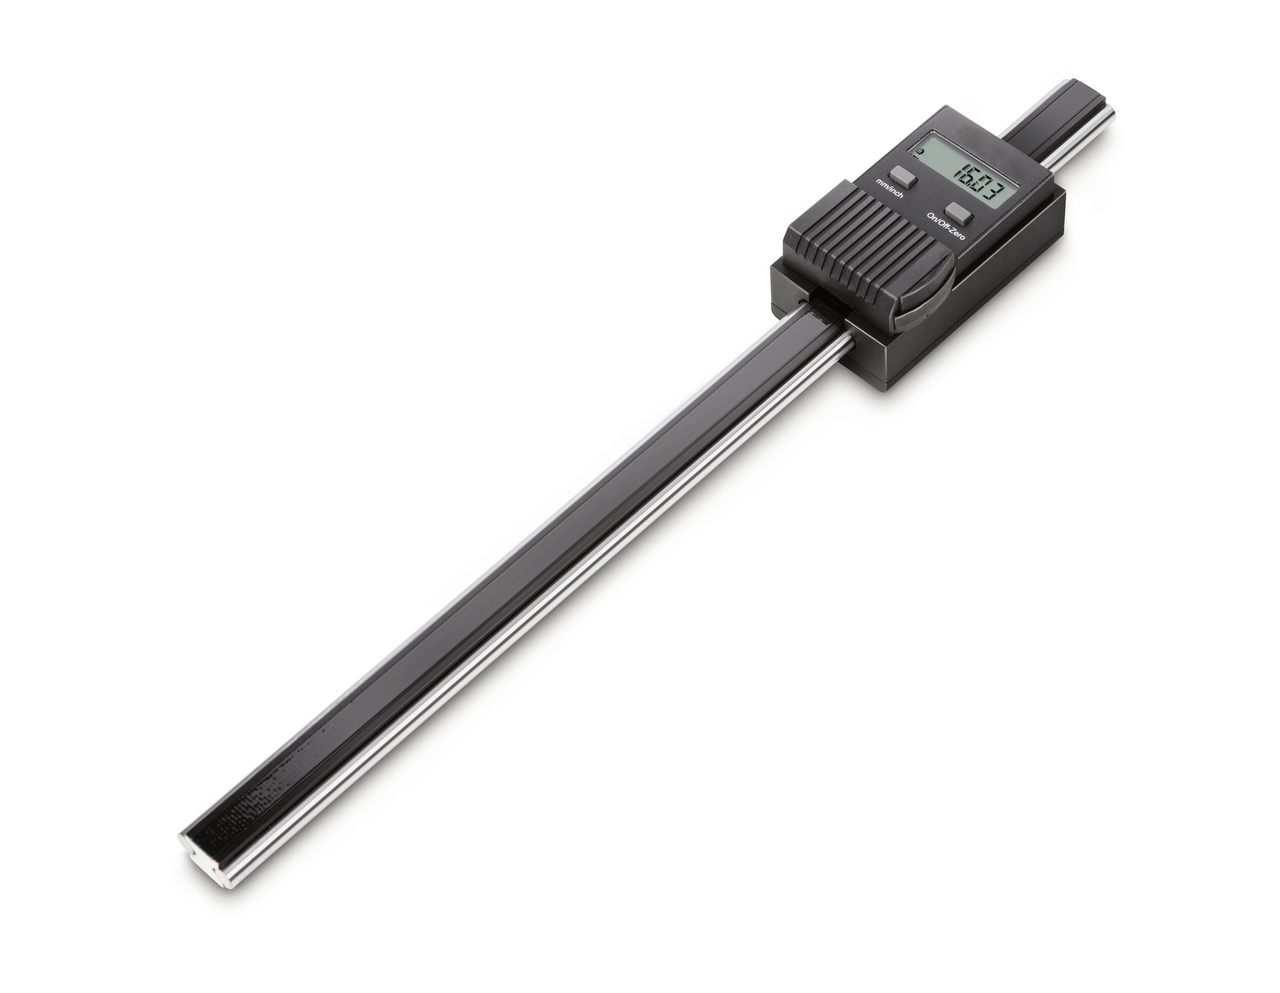 Integrated Calliper Gauge, Digital, 200mm Max. Length, 0.01mm Readability